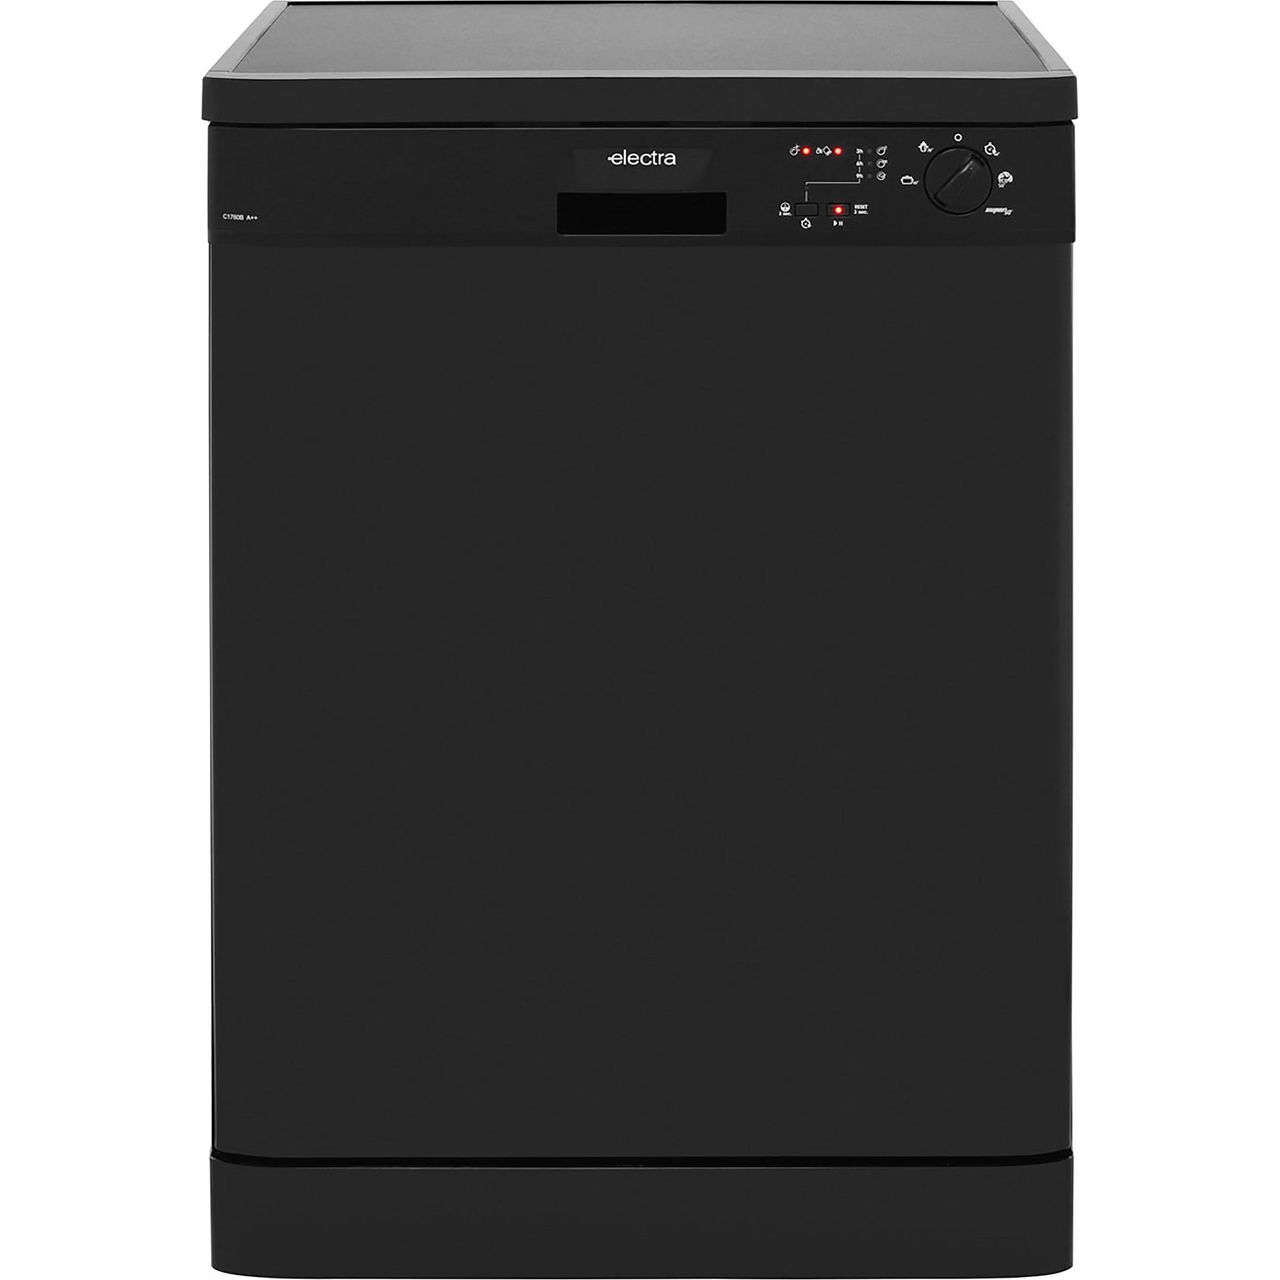 electra dishwasher review